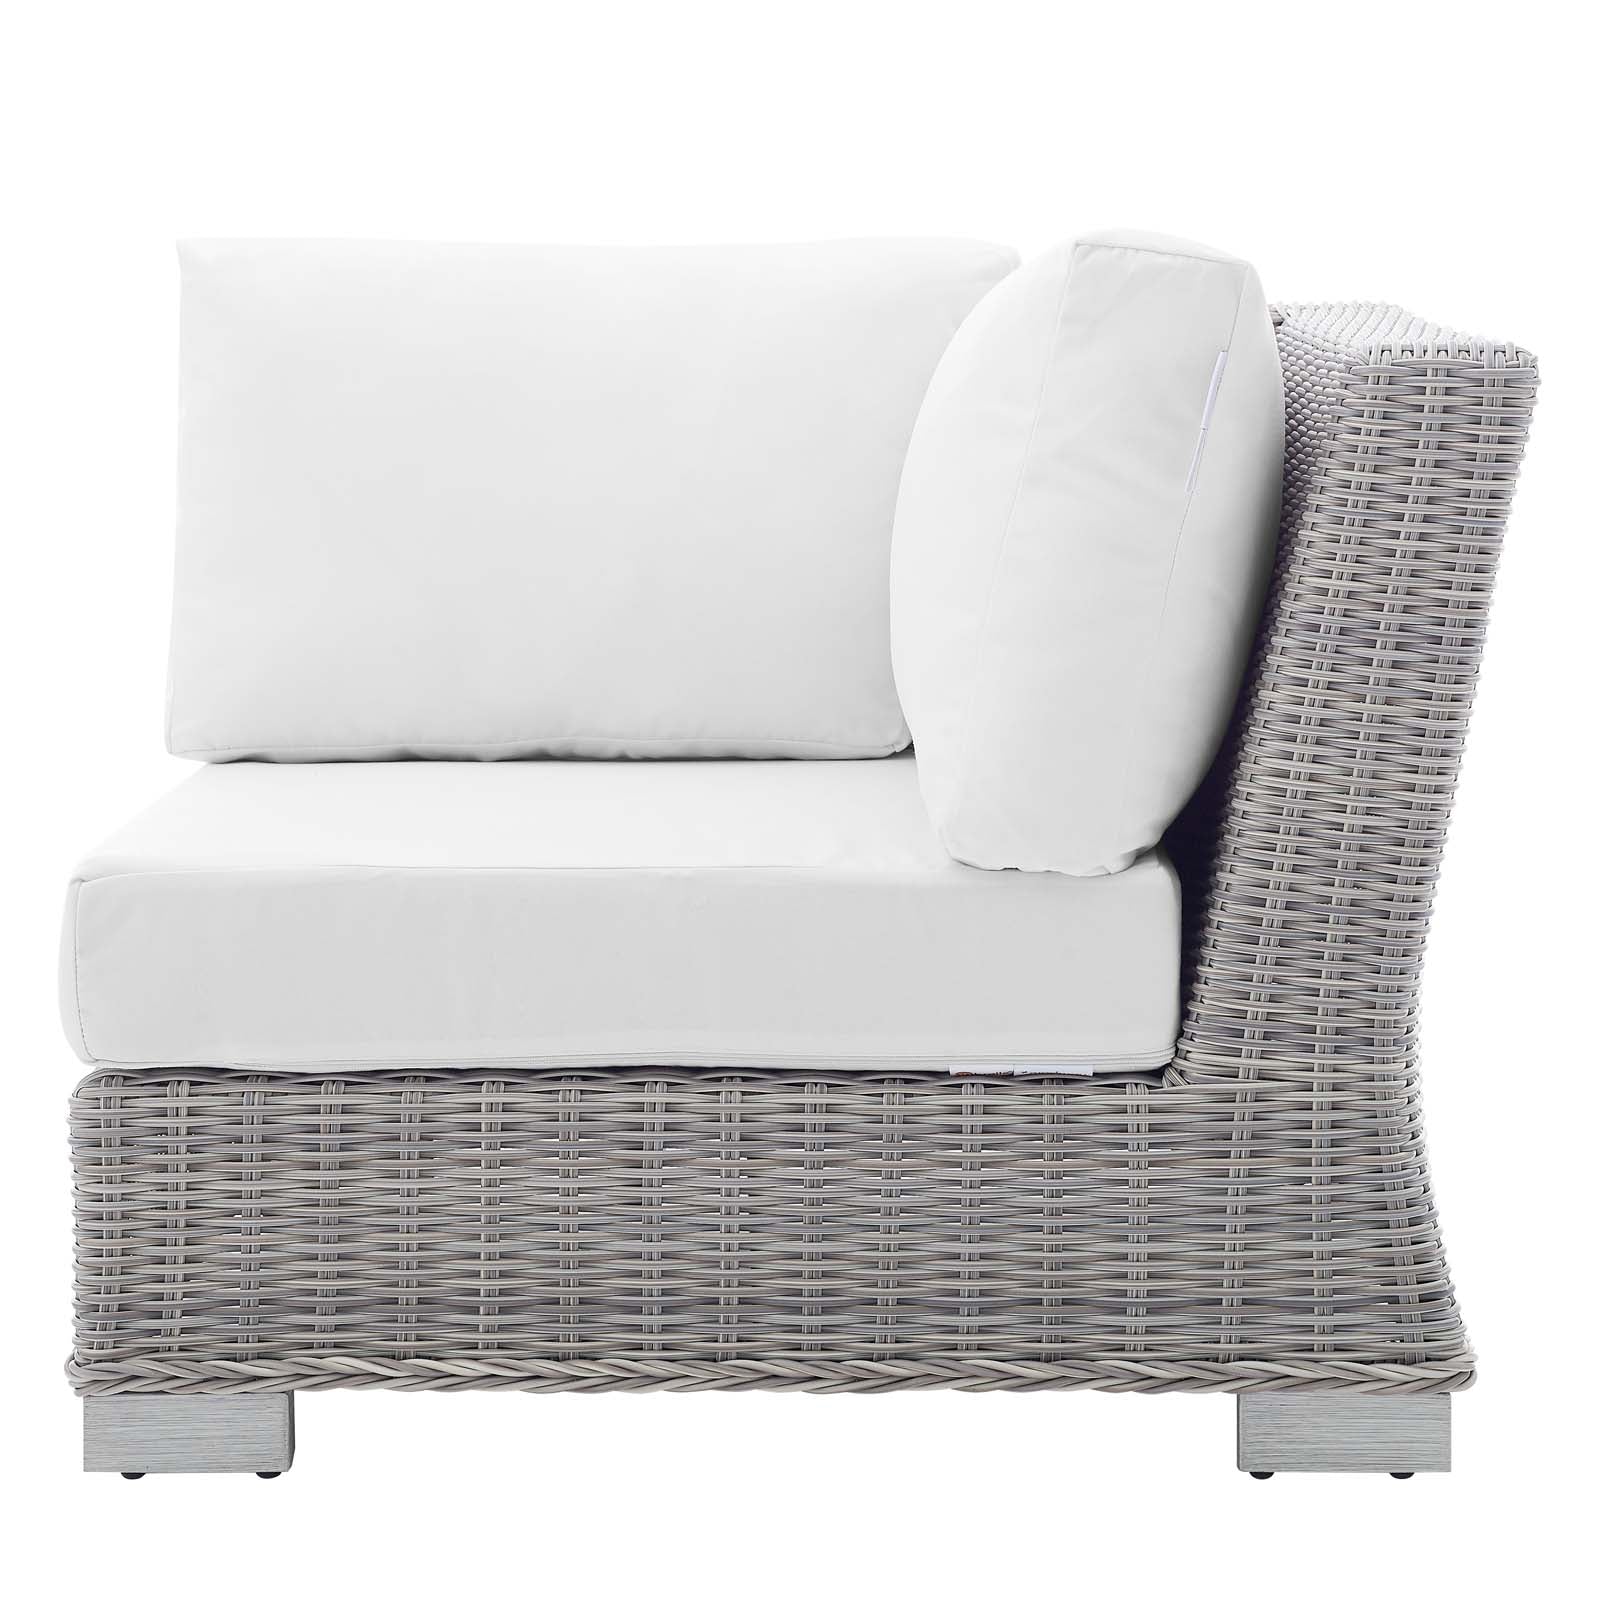 Conway Sunbrella® Outdoor Patio Wicker Rattan Corner Chair